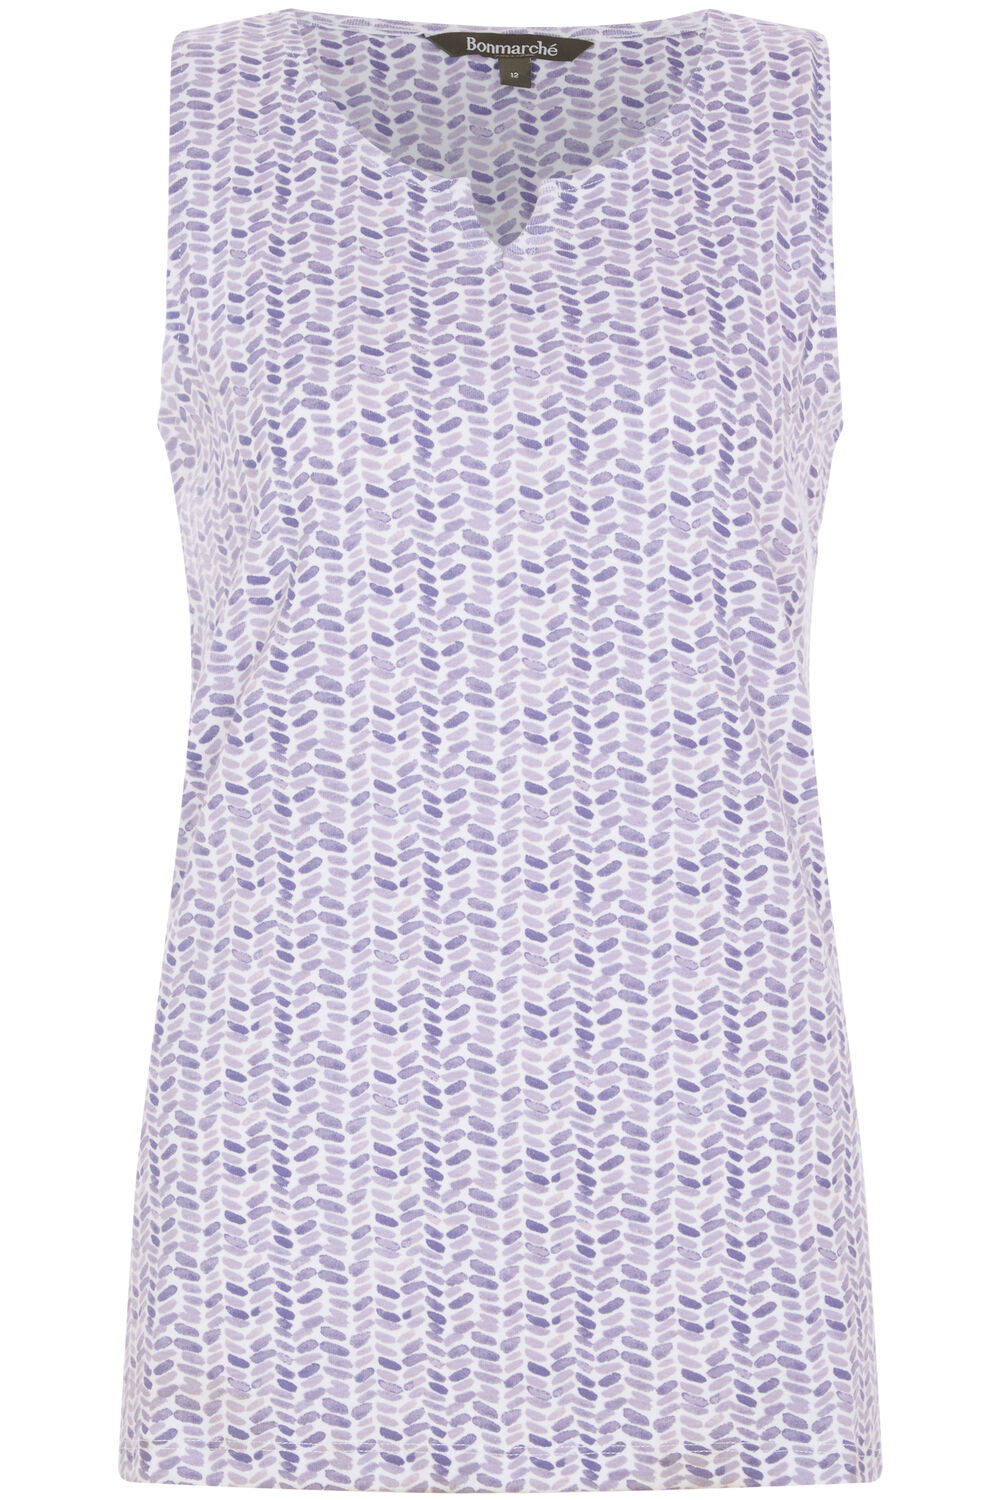 Bonmarche Purple Sleeveless Watercolour Chevron Print Notch Neck Vest, Size: 28